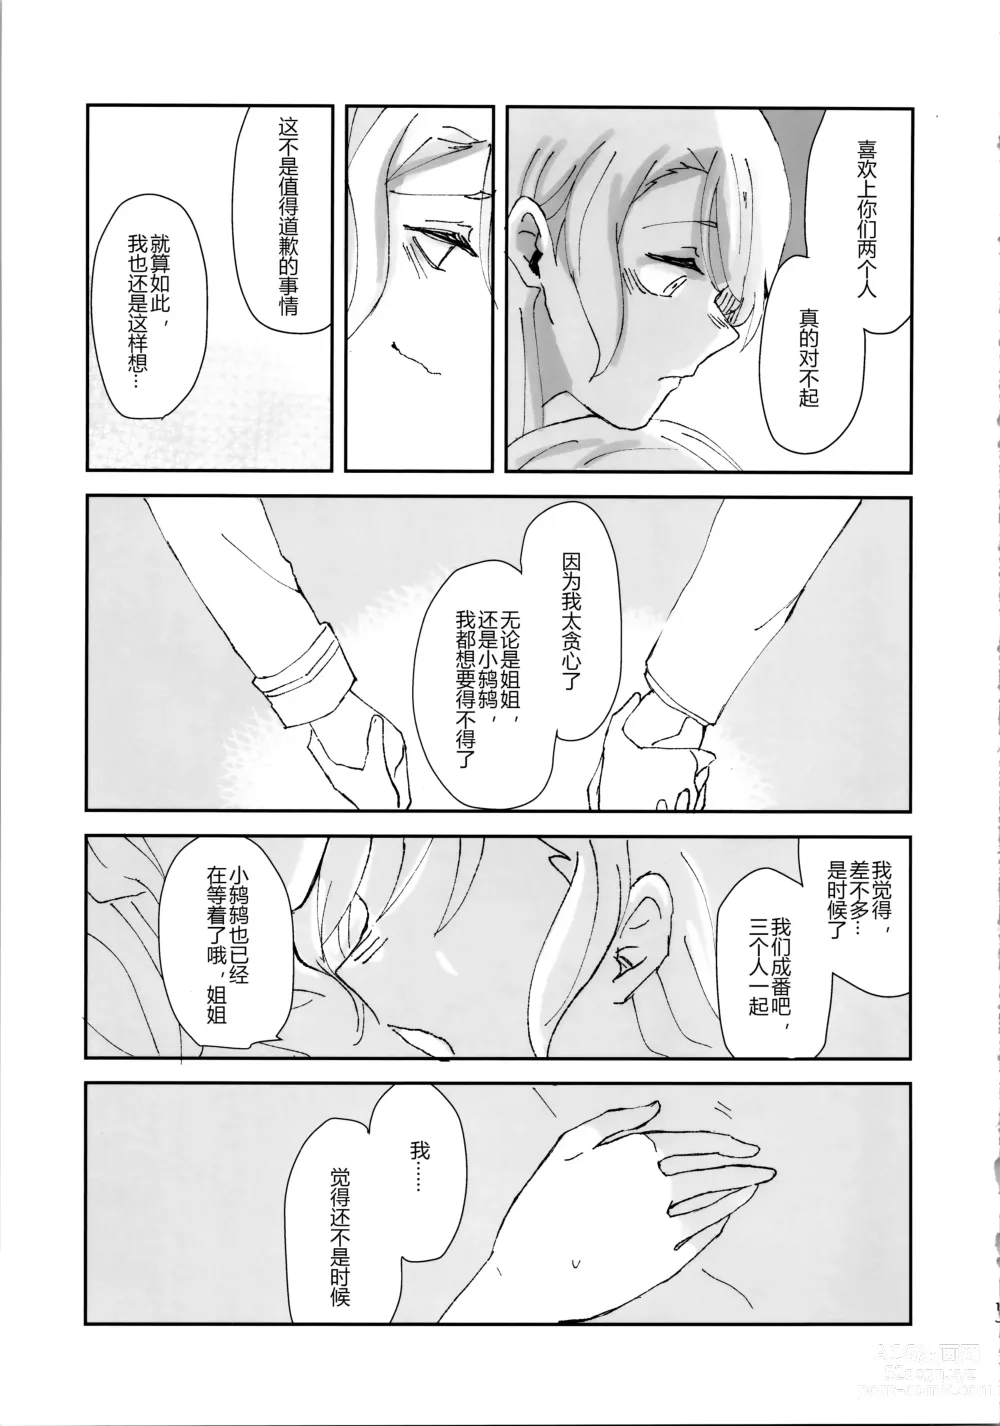 Page 15 of doujinshi 只要爱着彼此就好